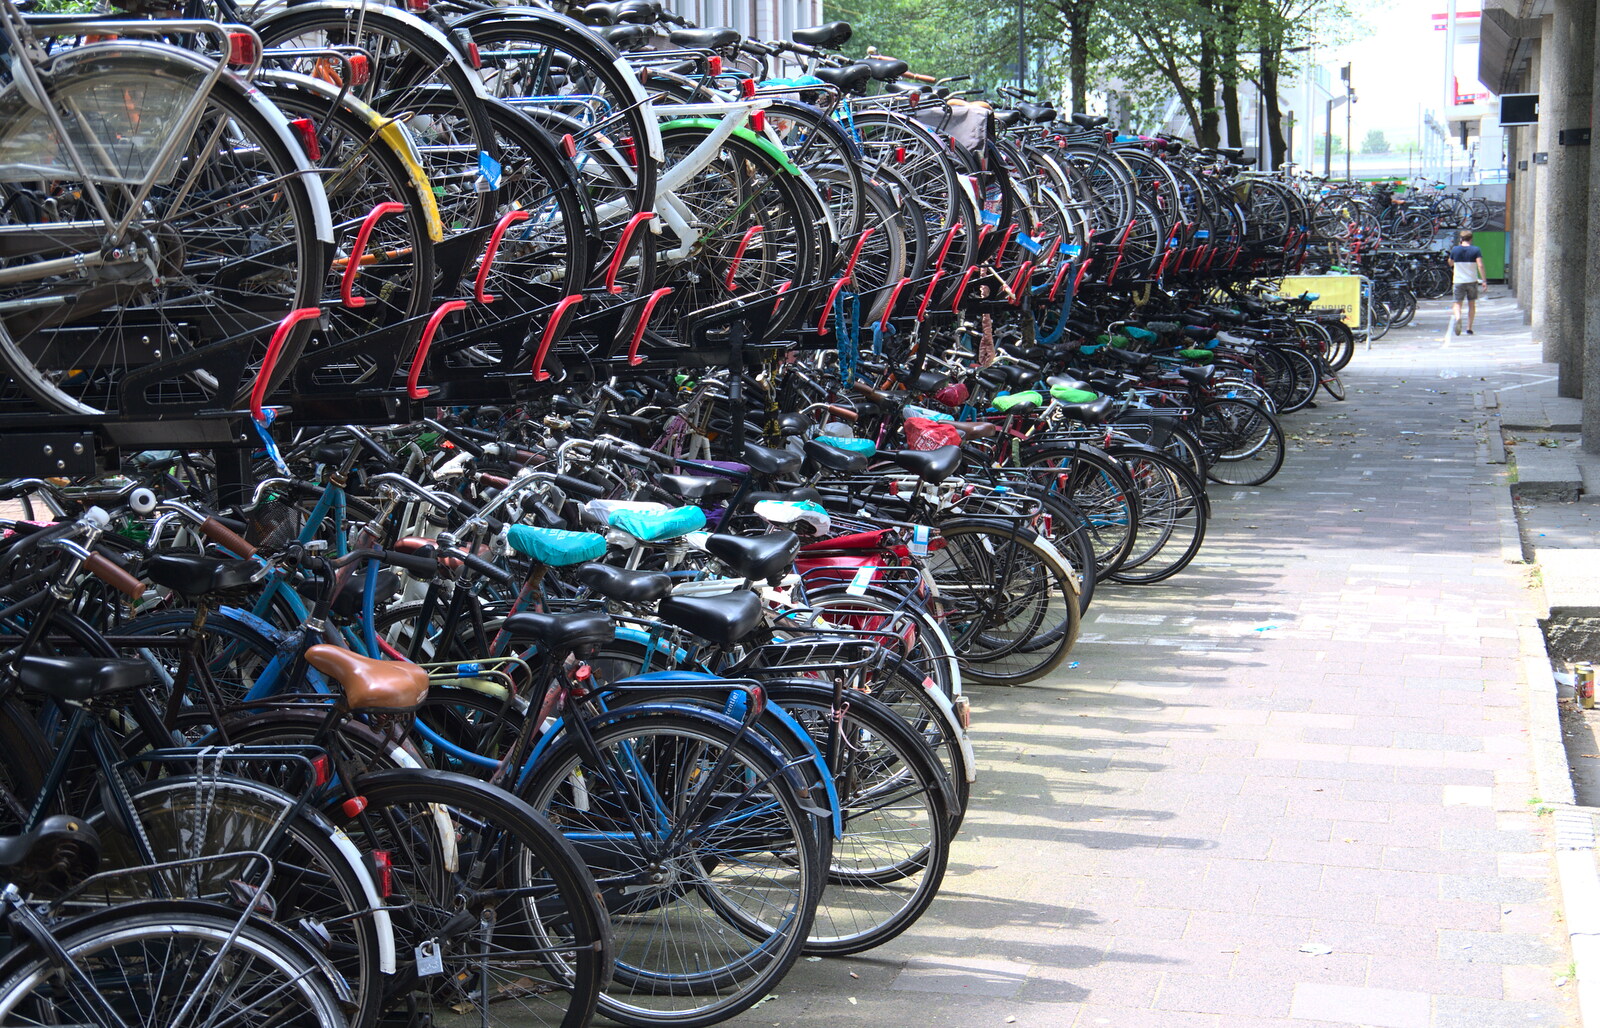 One of several epic bike racks from A Postcard from Utrecht, Nederlands - 10th June 2018